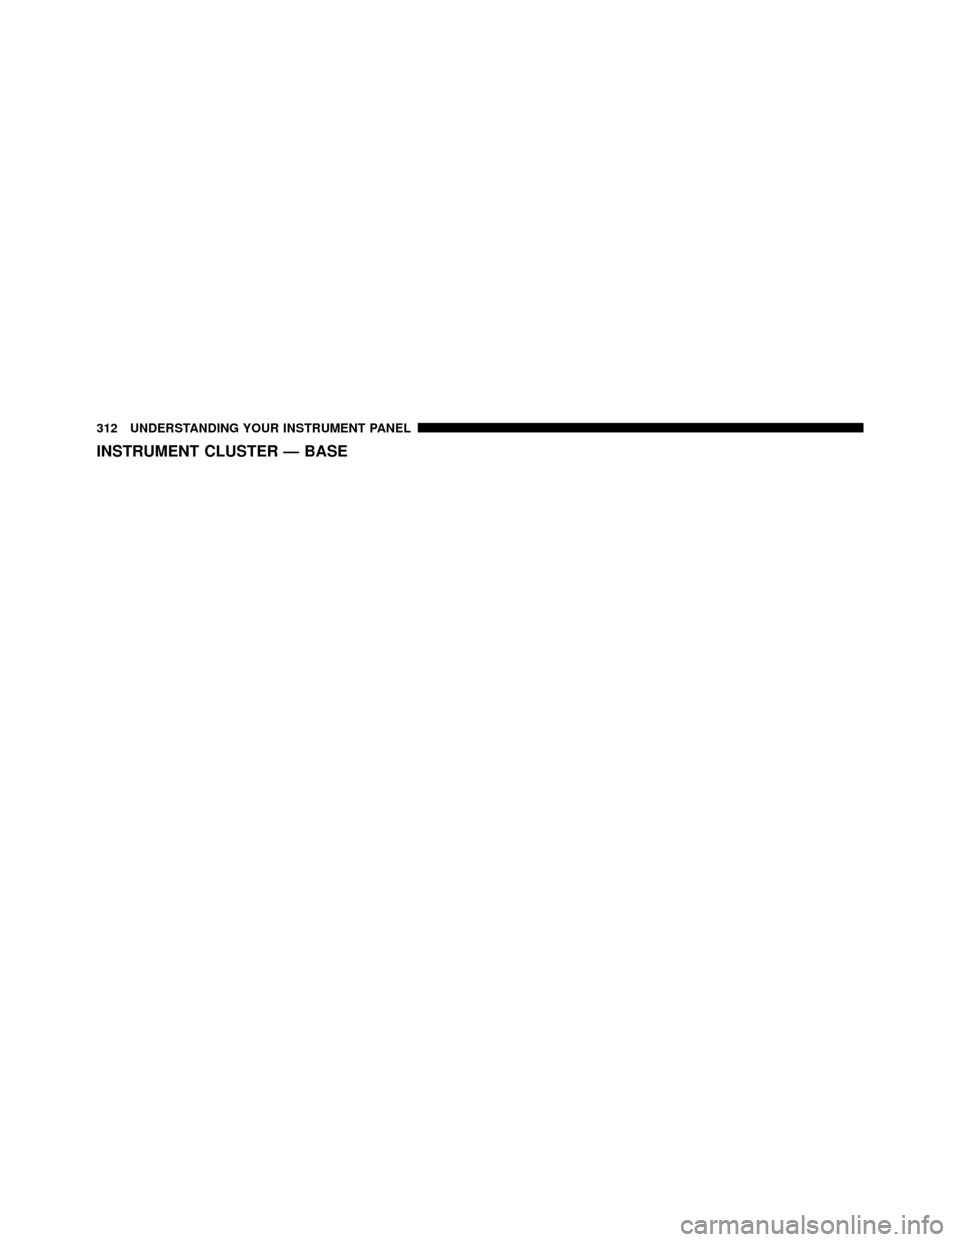 DODGE GRAND CARAVAN 2014 5.G Owners Manual INSTRUMENT CLUSTER — BASE
312 UNDERSTANDING YOUR INSTRUMENT PANEL 